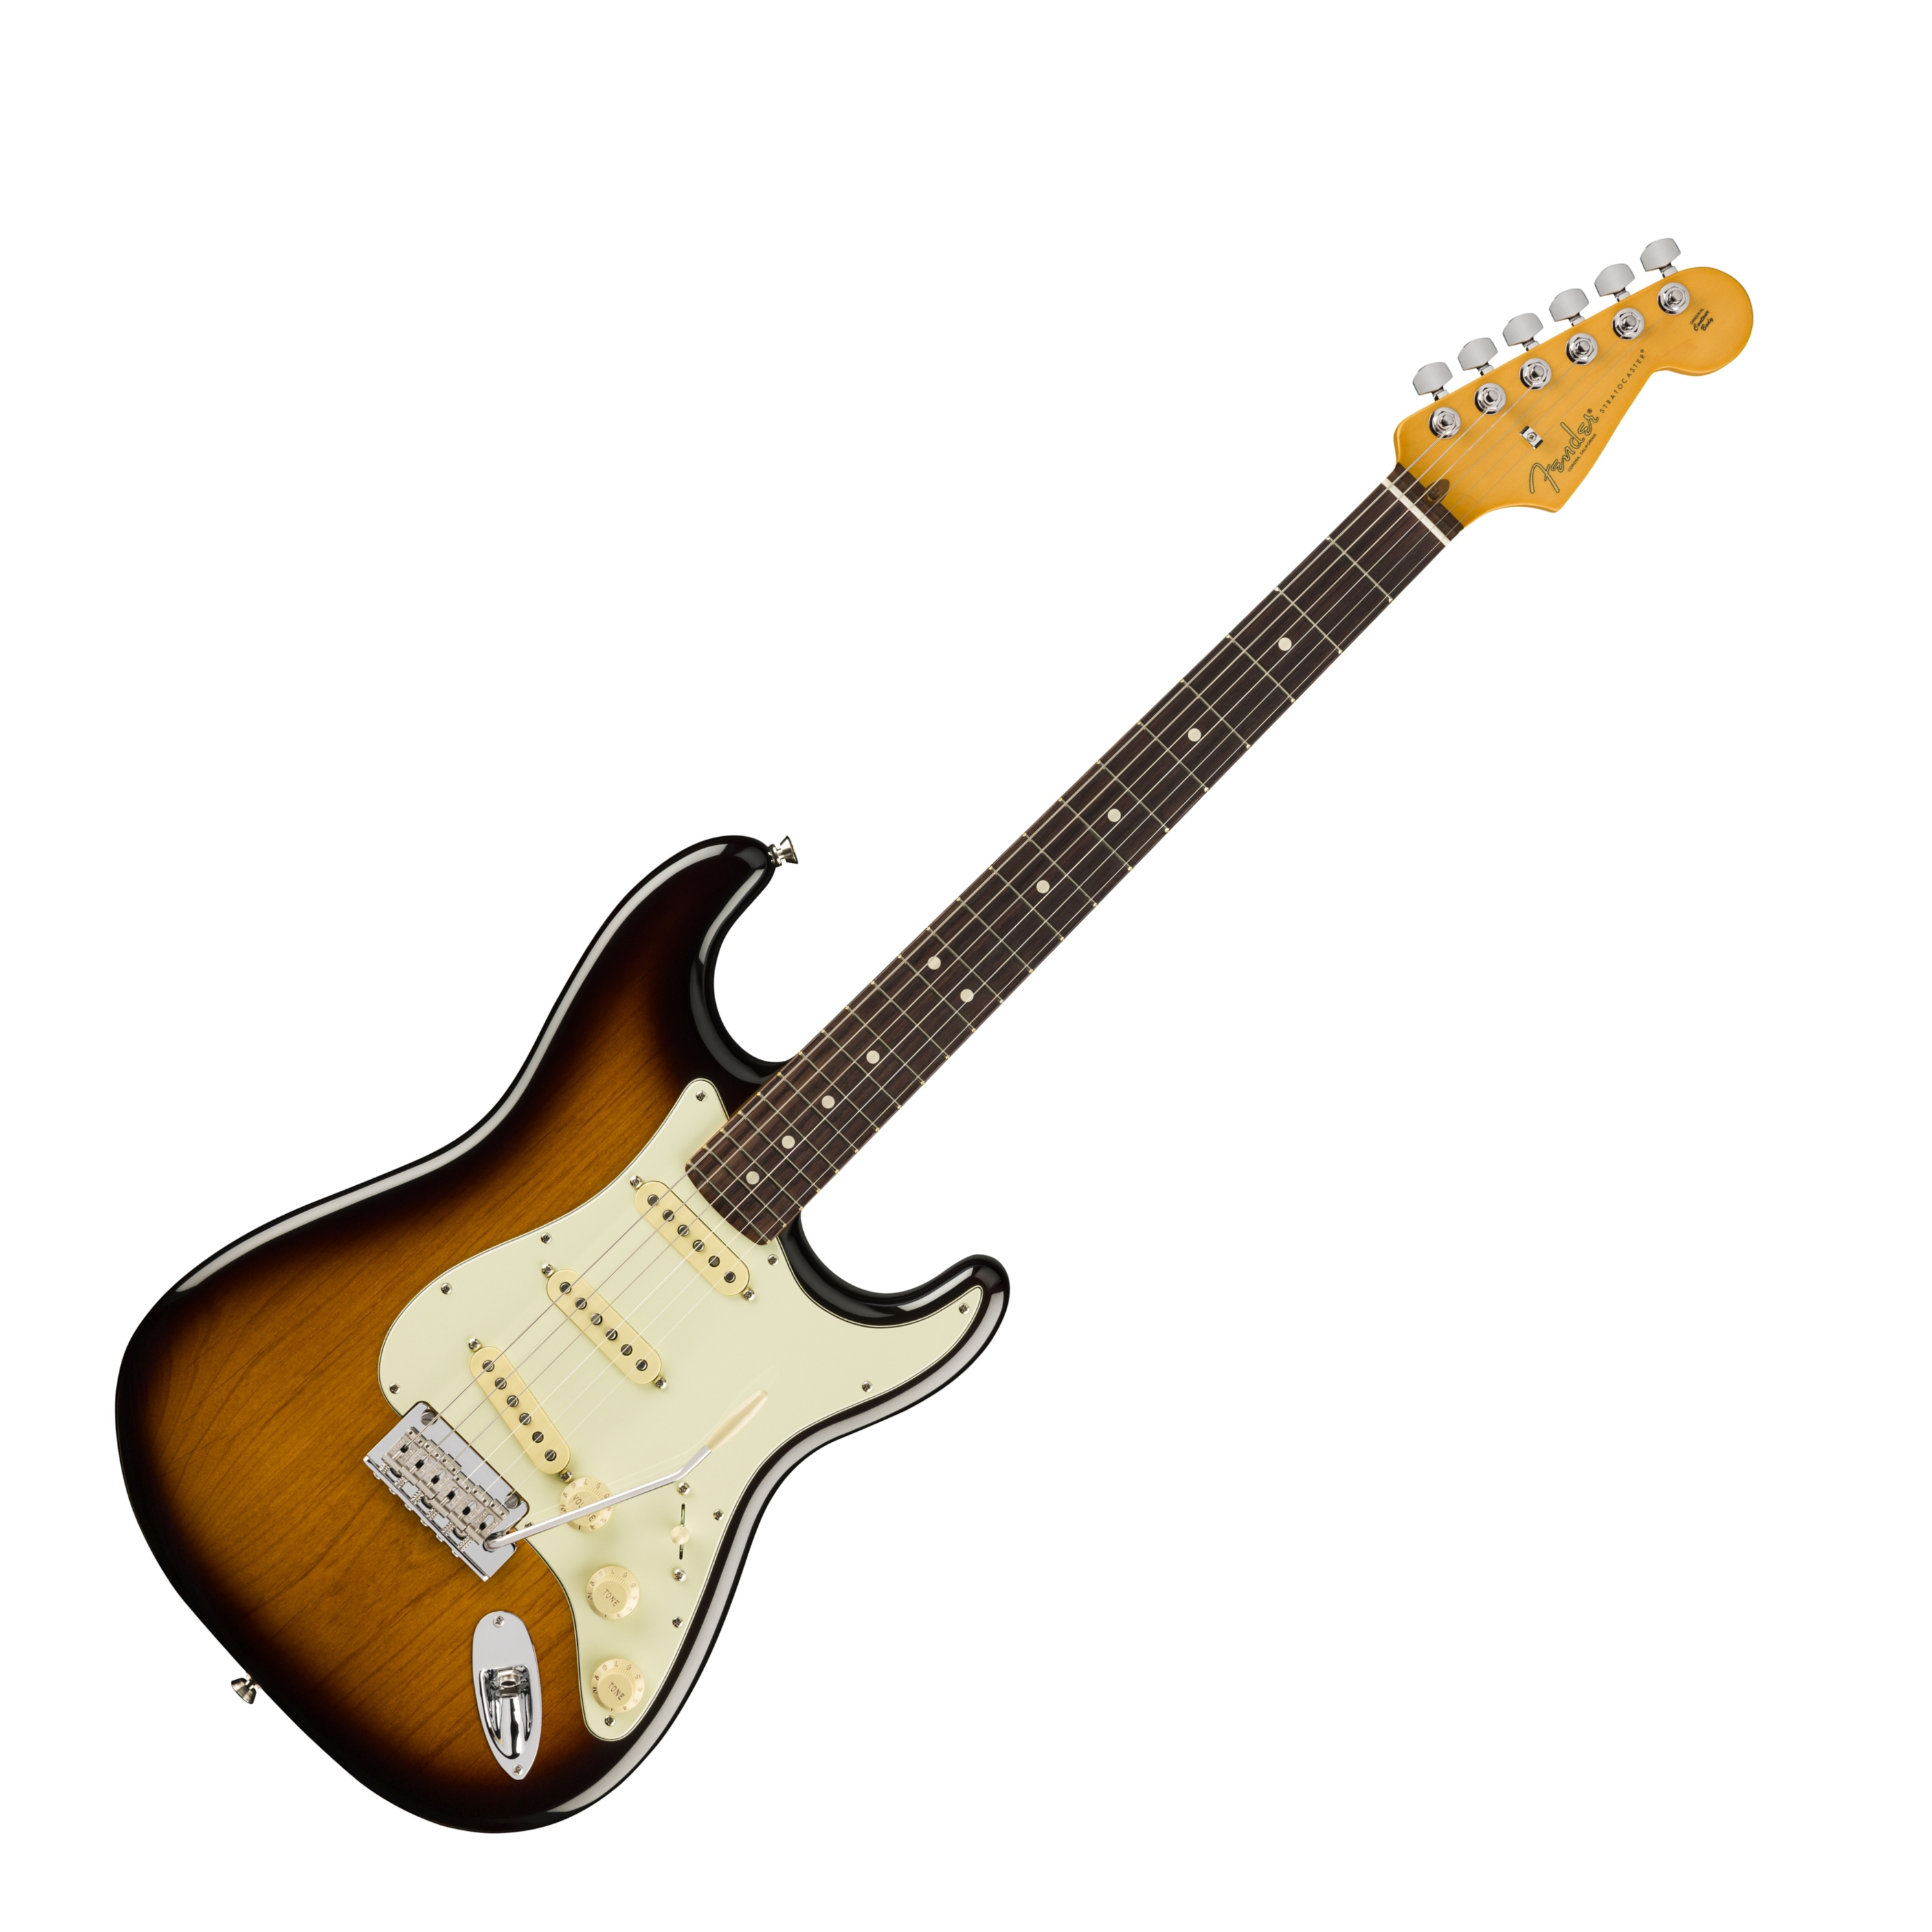 Fender Strat American Professional Ii 70th Anniversary Usa 3s Trem Rw - 2-color Sunburst - Str shape electric guitar - Variation 1